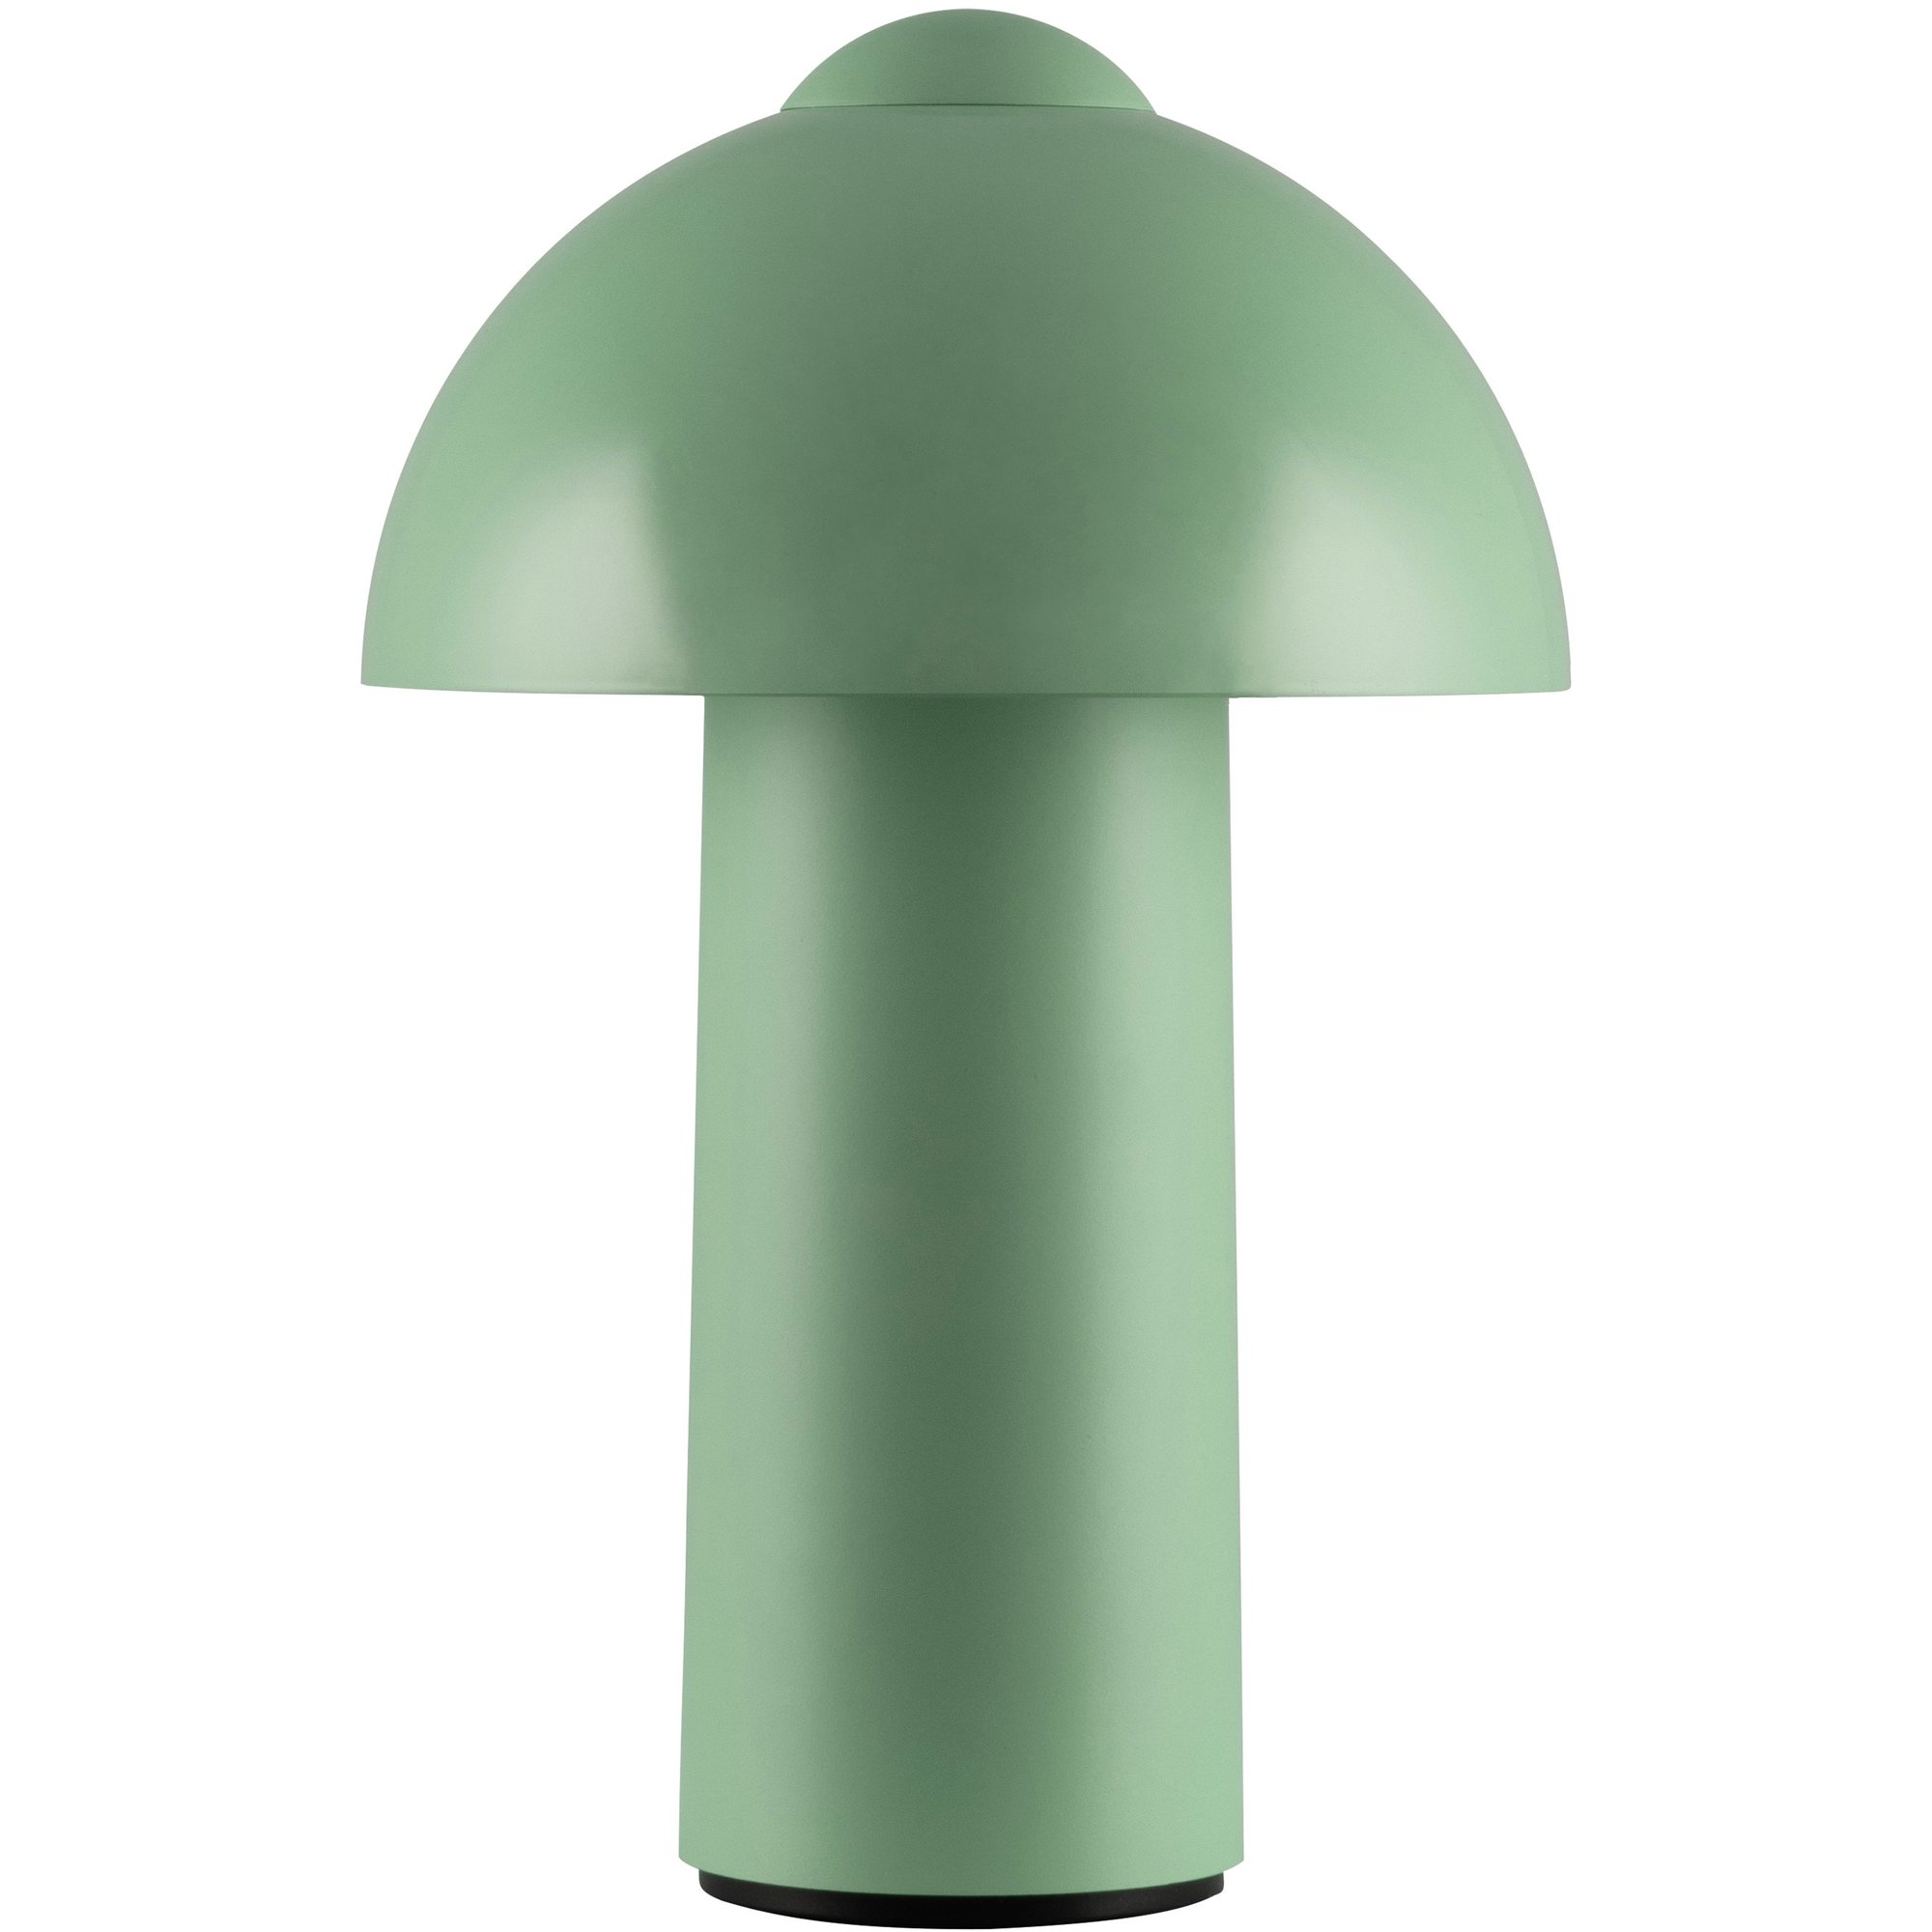 Globen Lighting Buddy IP44 portabel bordslampa, grön